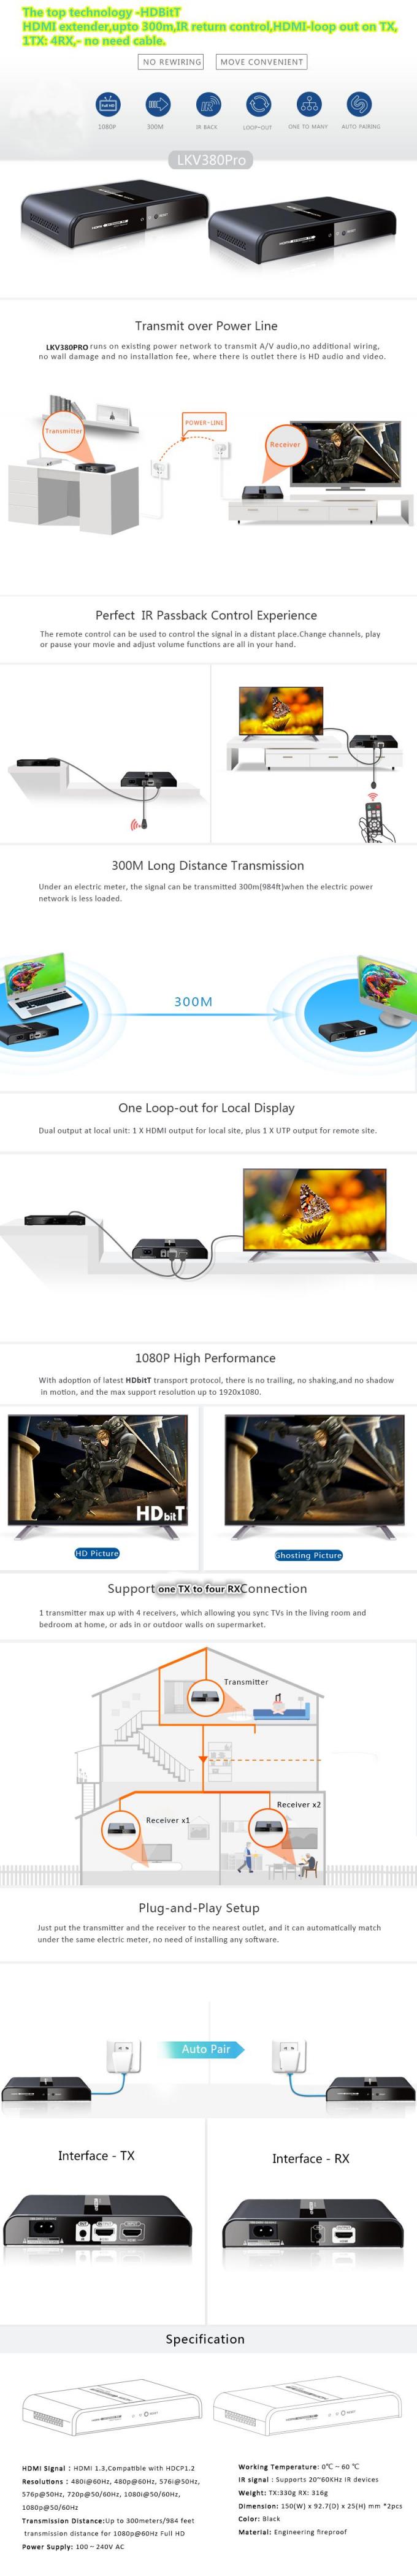 Black 1080P DVB - S Receiver For Digital Product Exhibition Image Sharpen